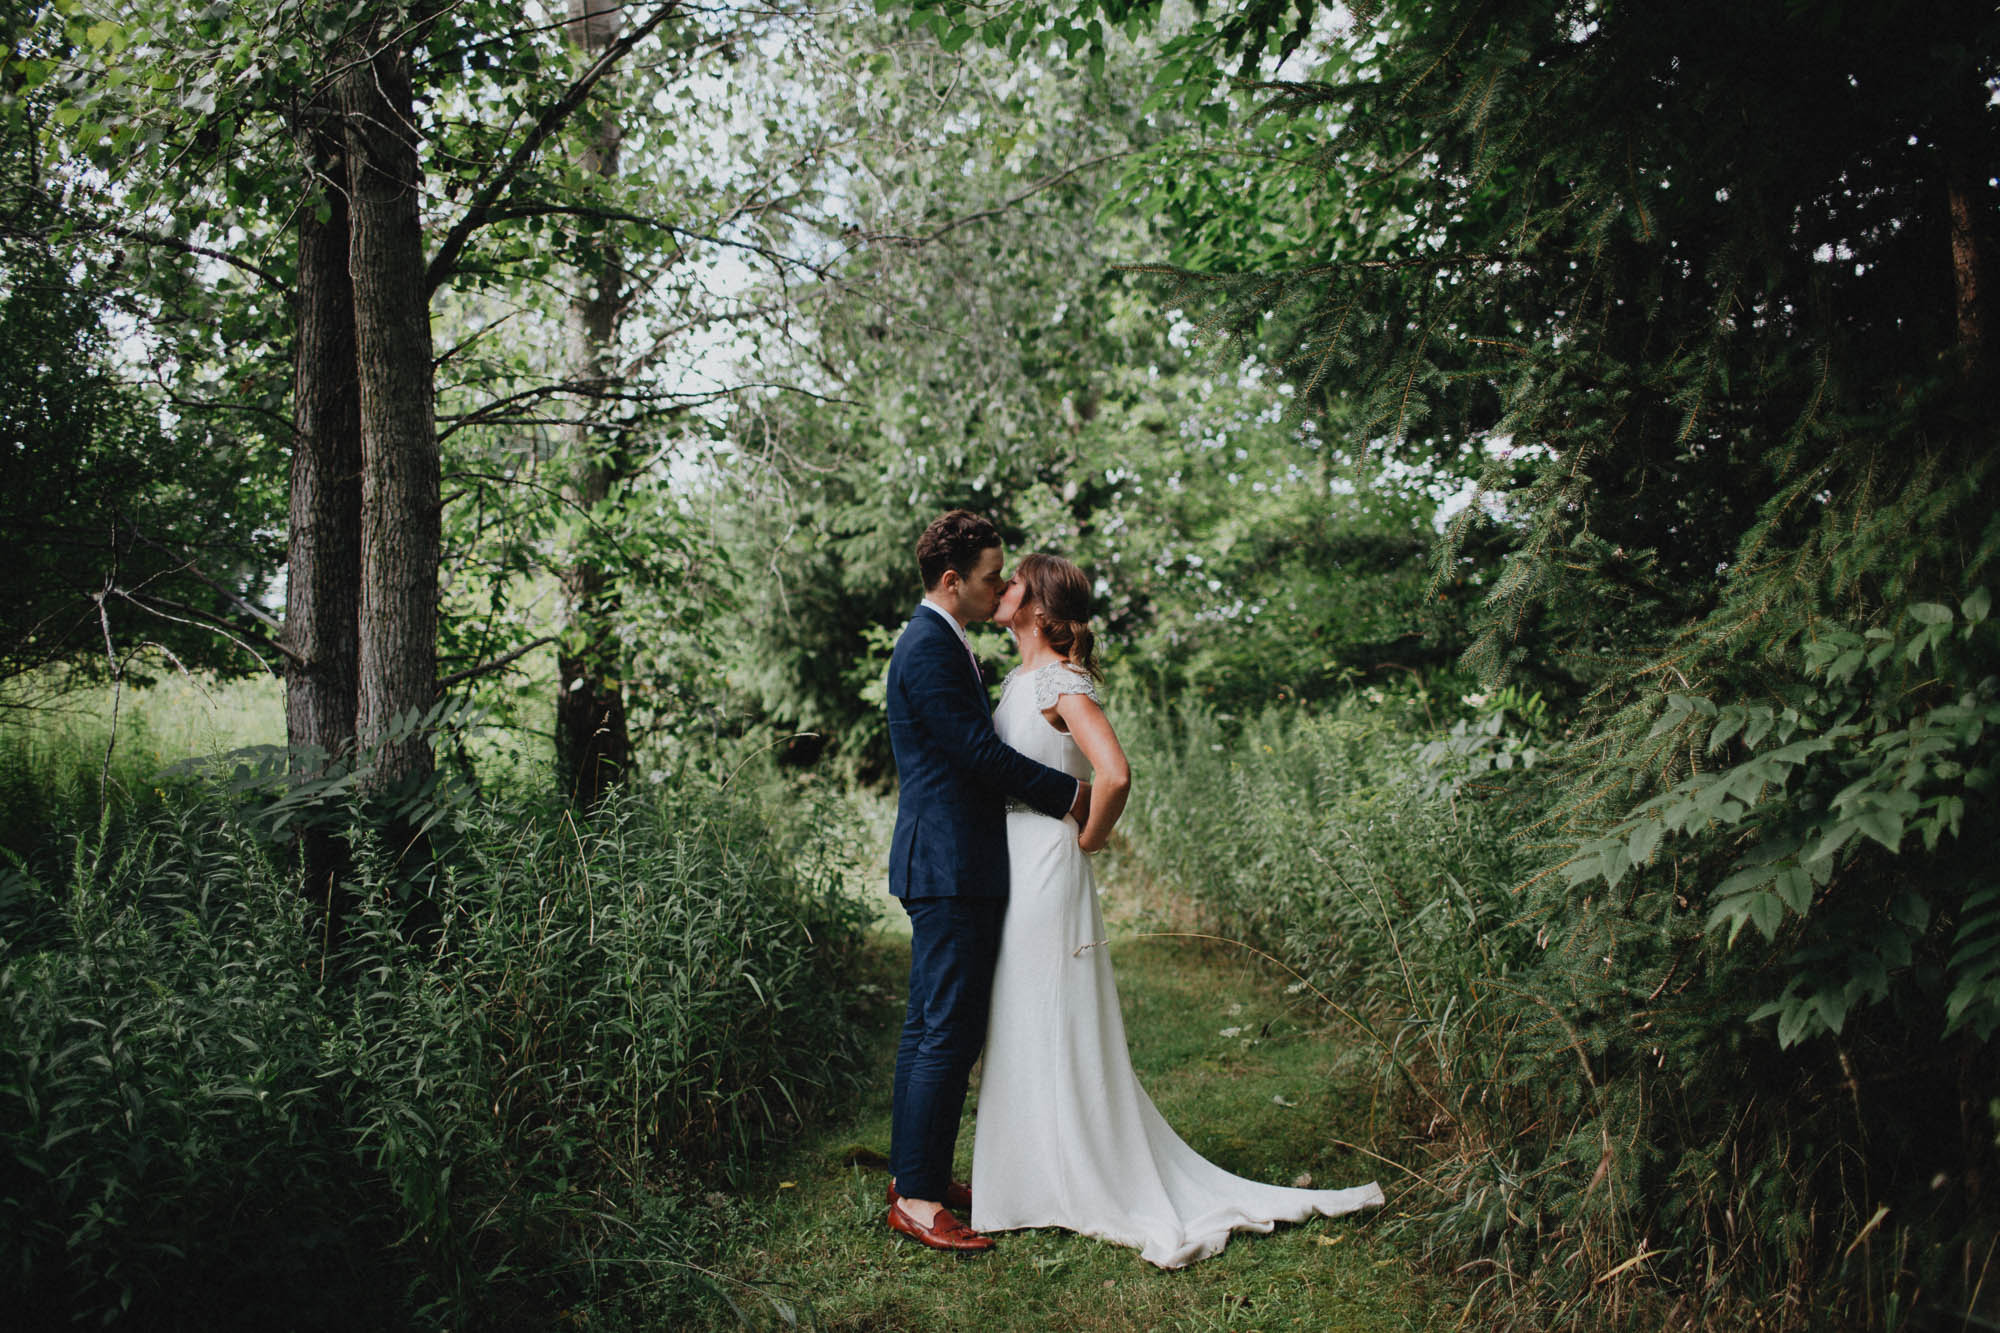 Leah-Graham-Michigan-Outdoor-DIY-Wedding-076@2x.jpg